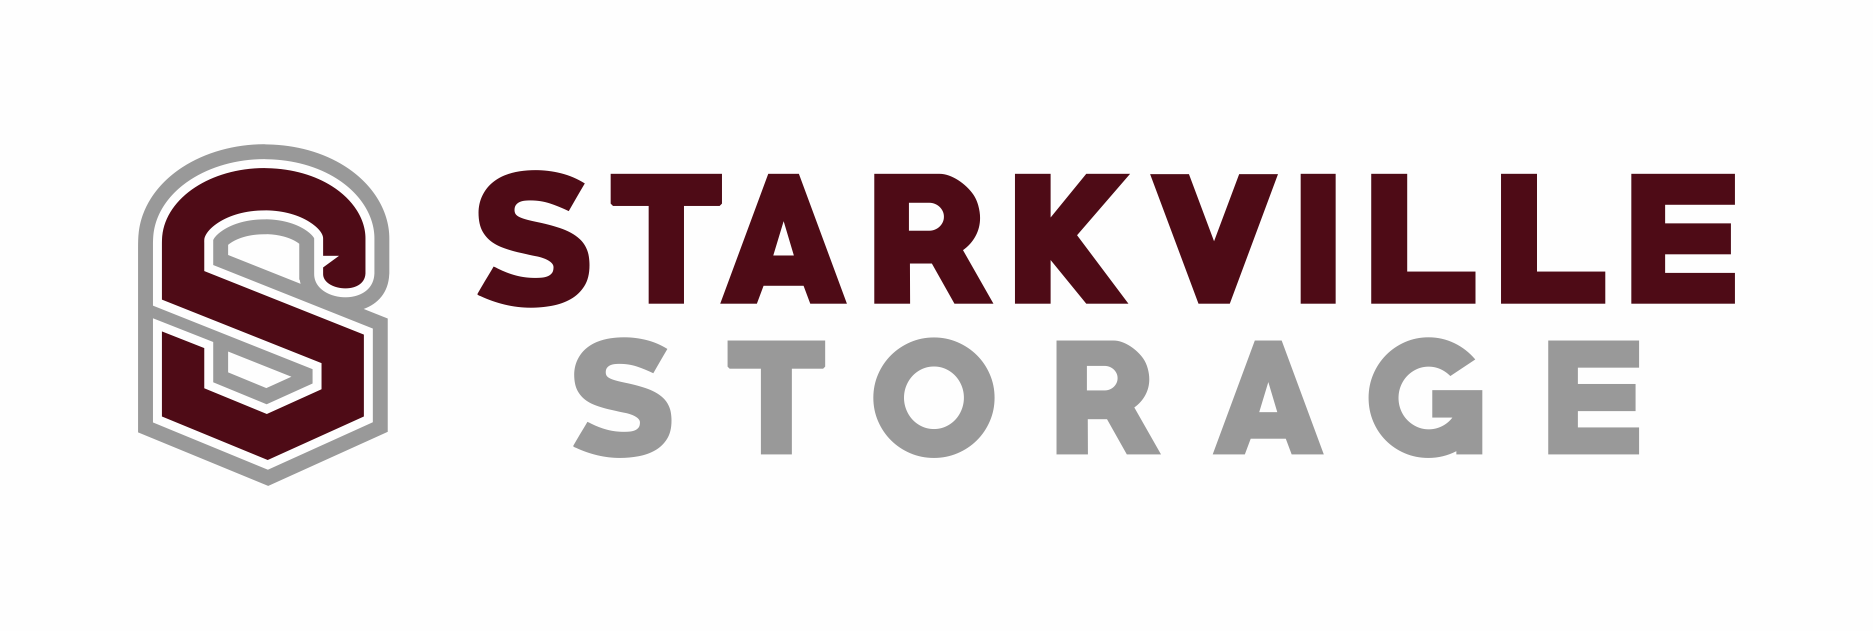 Starkville Storage.